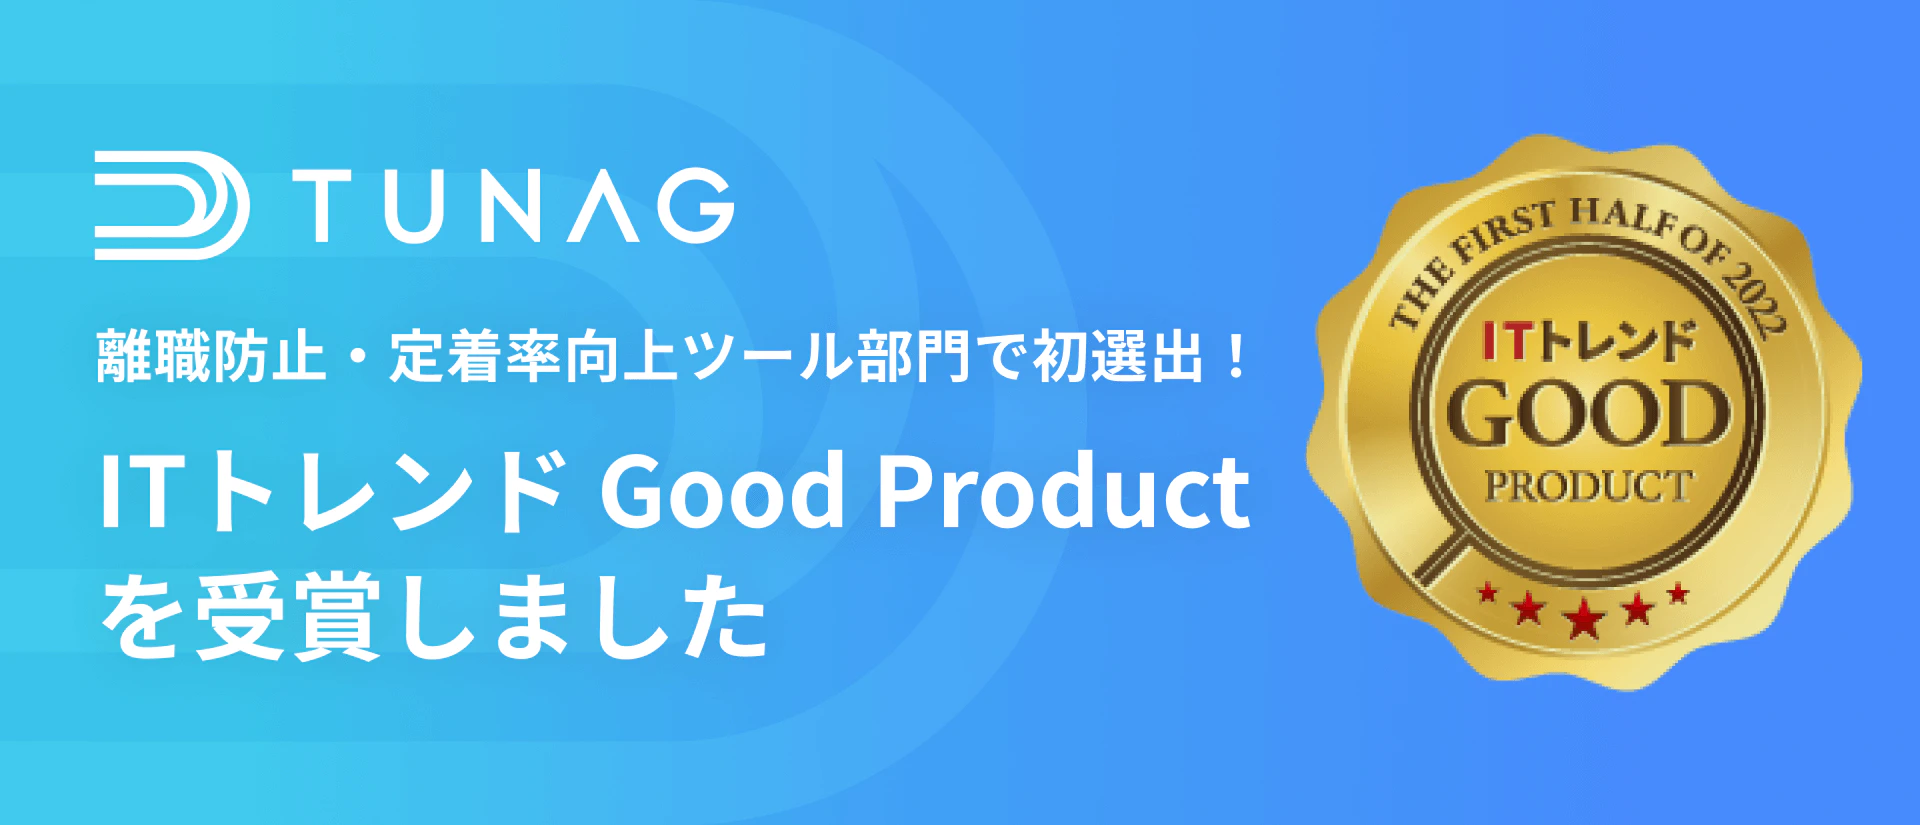 TUNAG、「ITトレンド Good Product」受賞